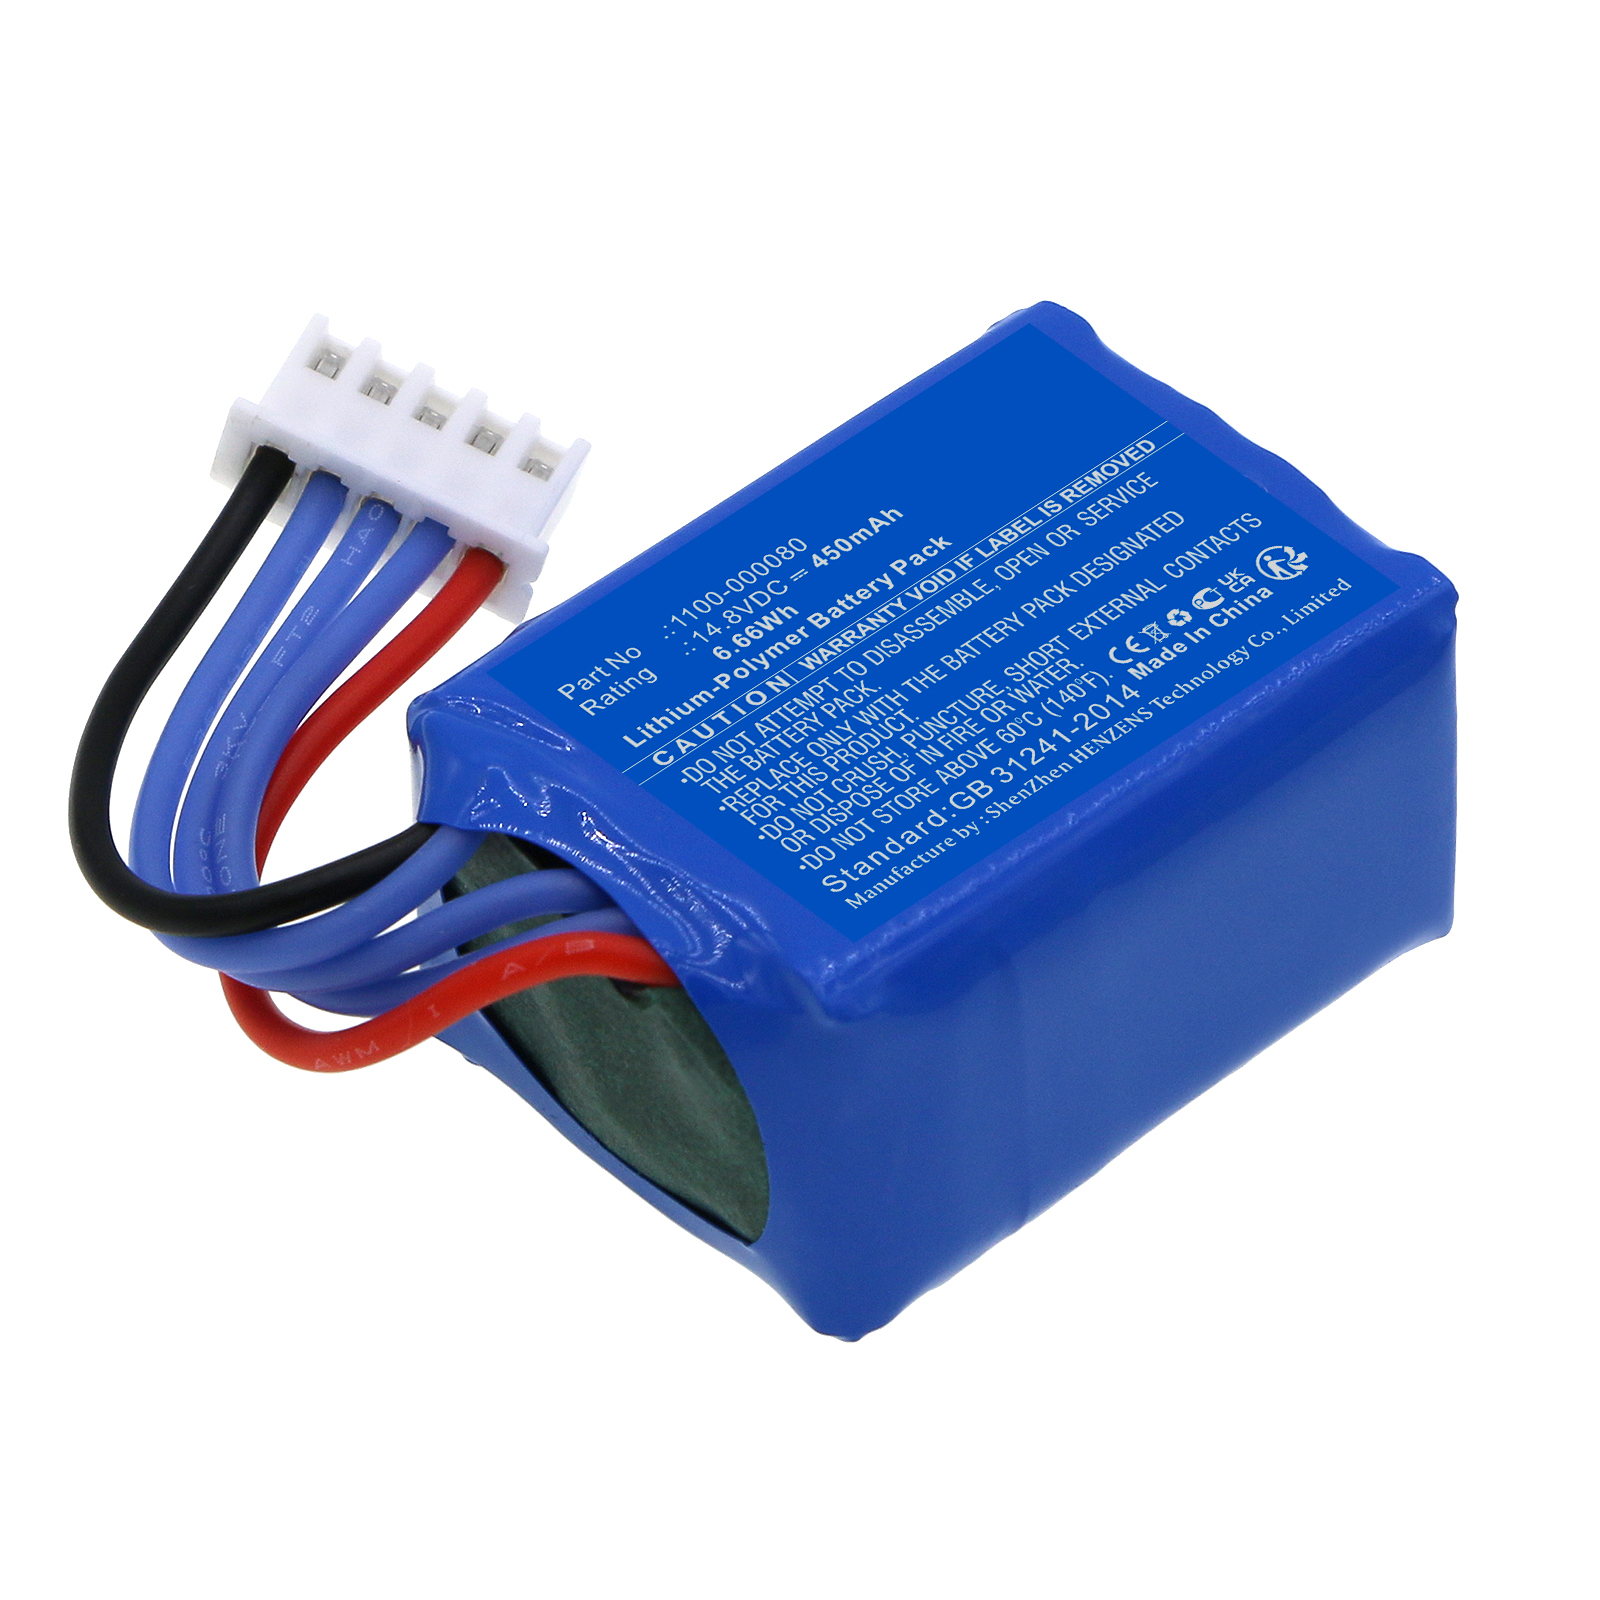 Batteries for WIR ElektronikAlarm System